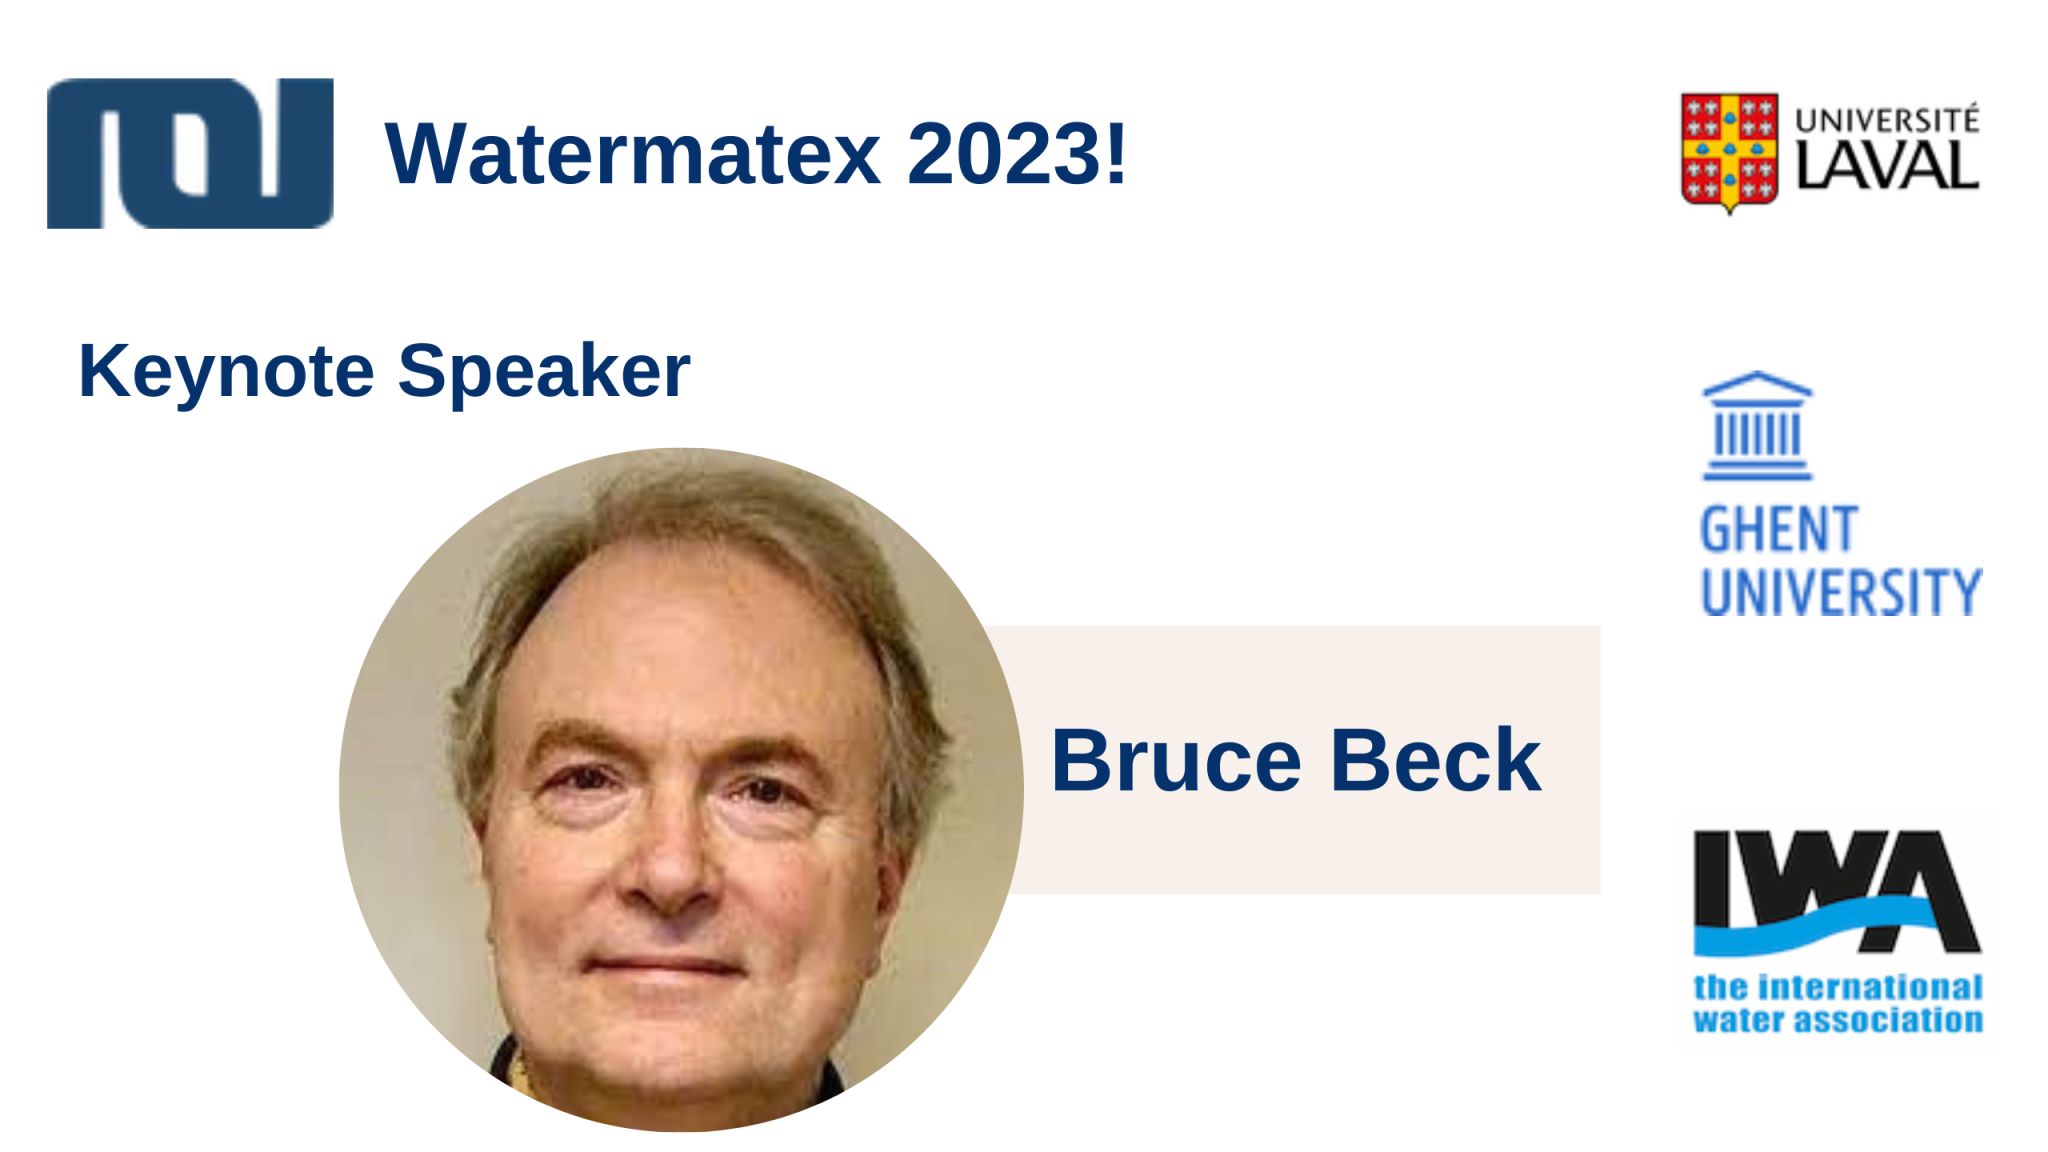 Keynote Speaker Bruce Beck